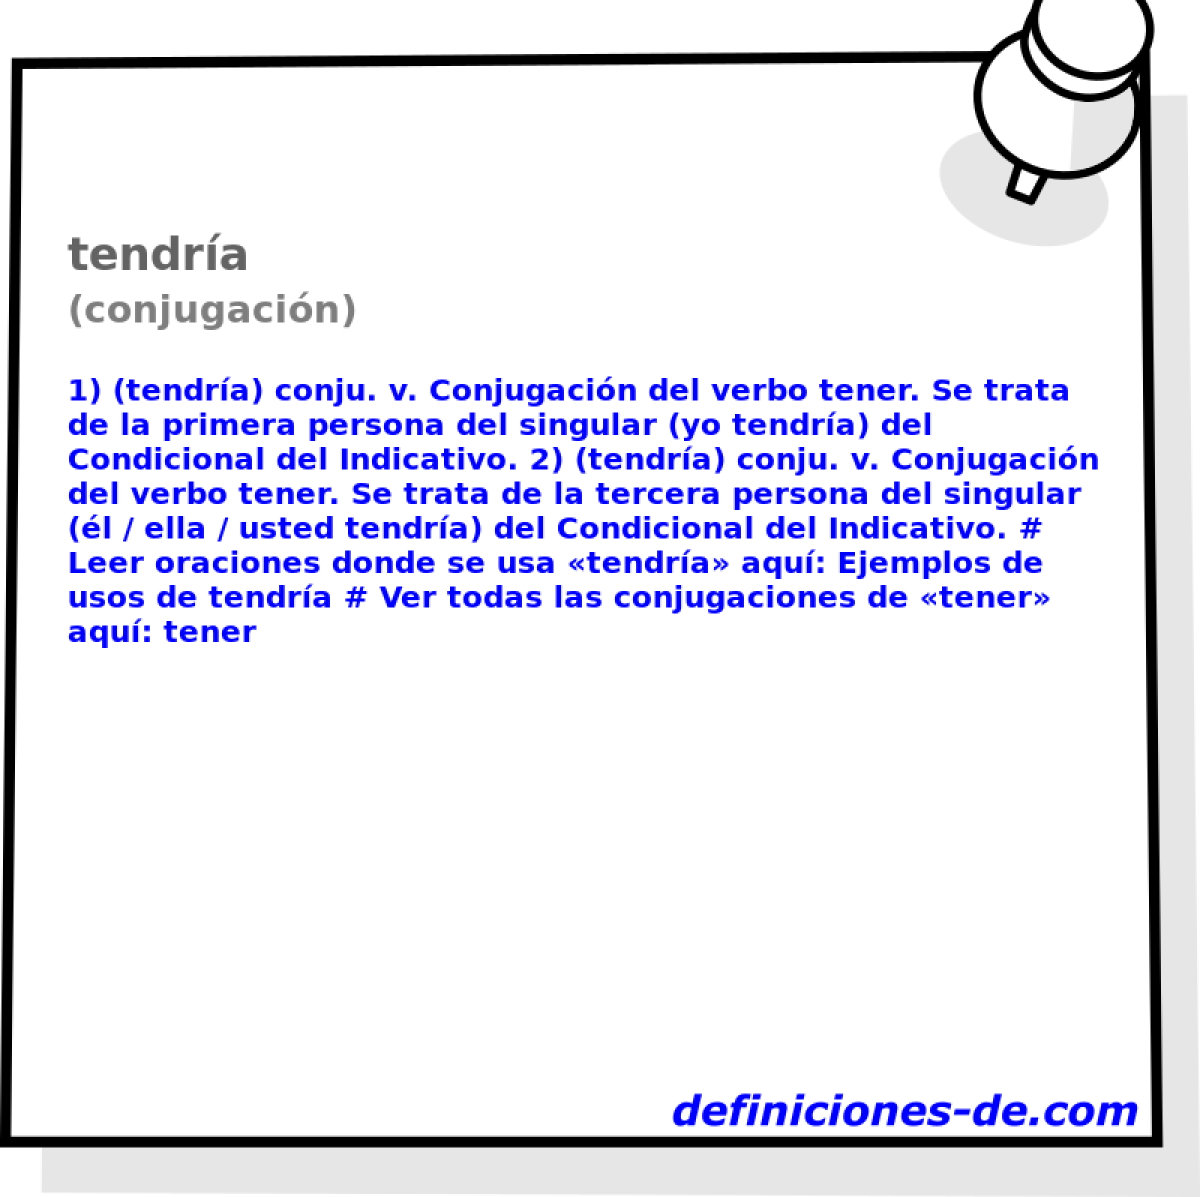 tendra (conjugacin)